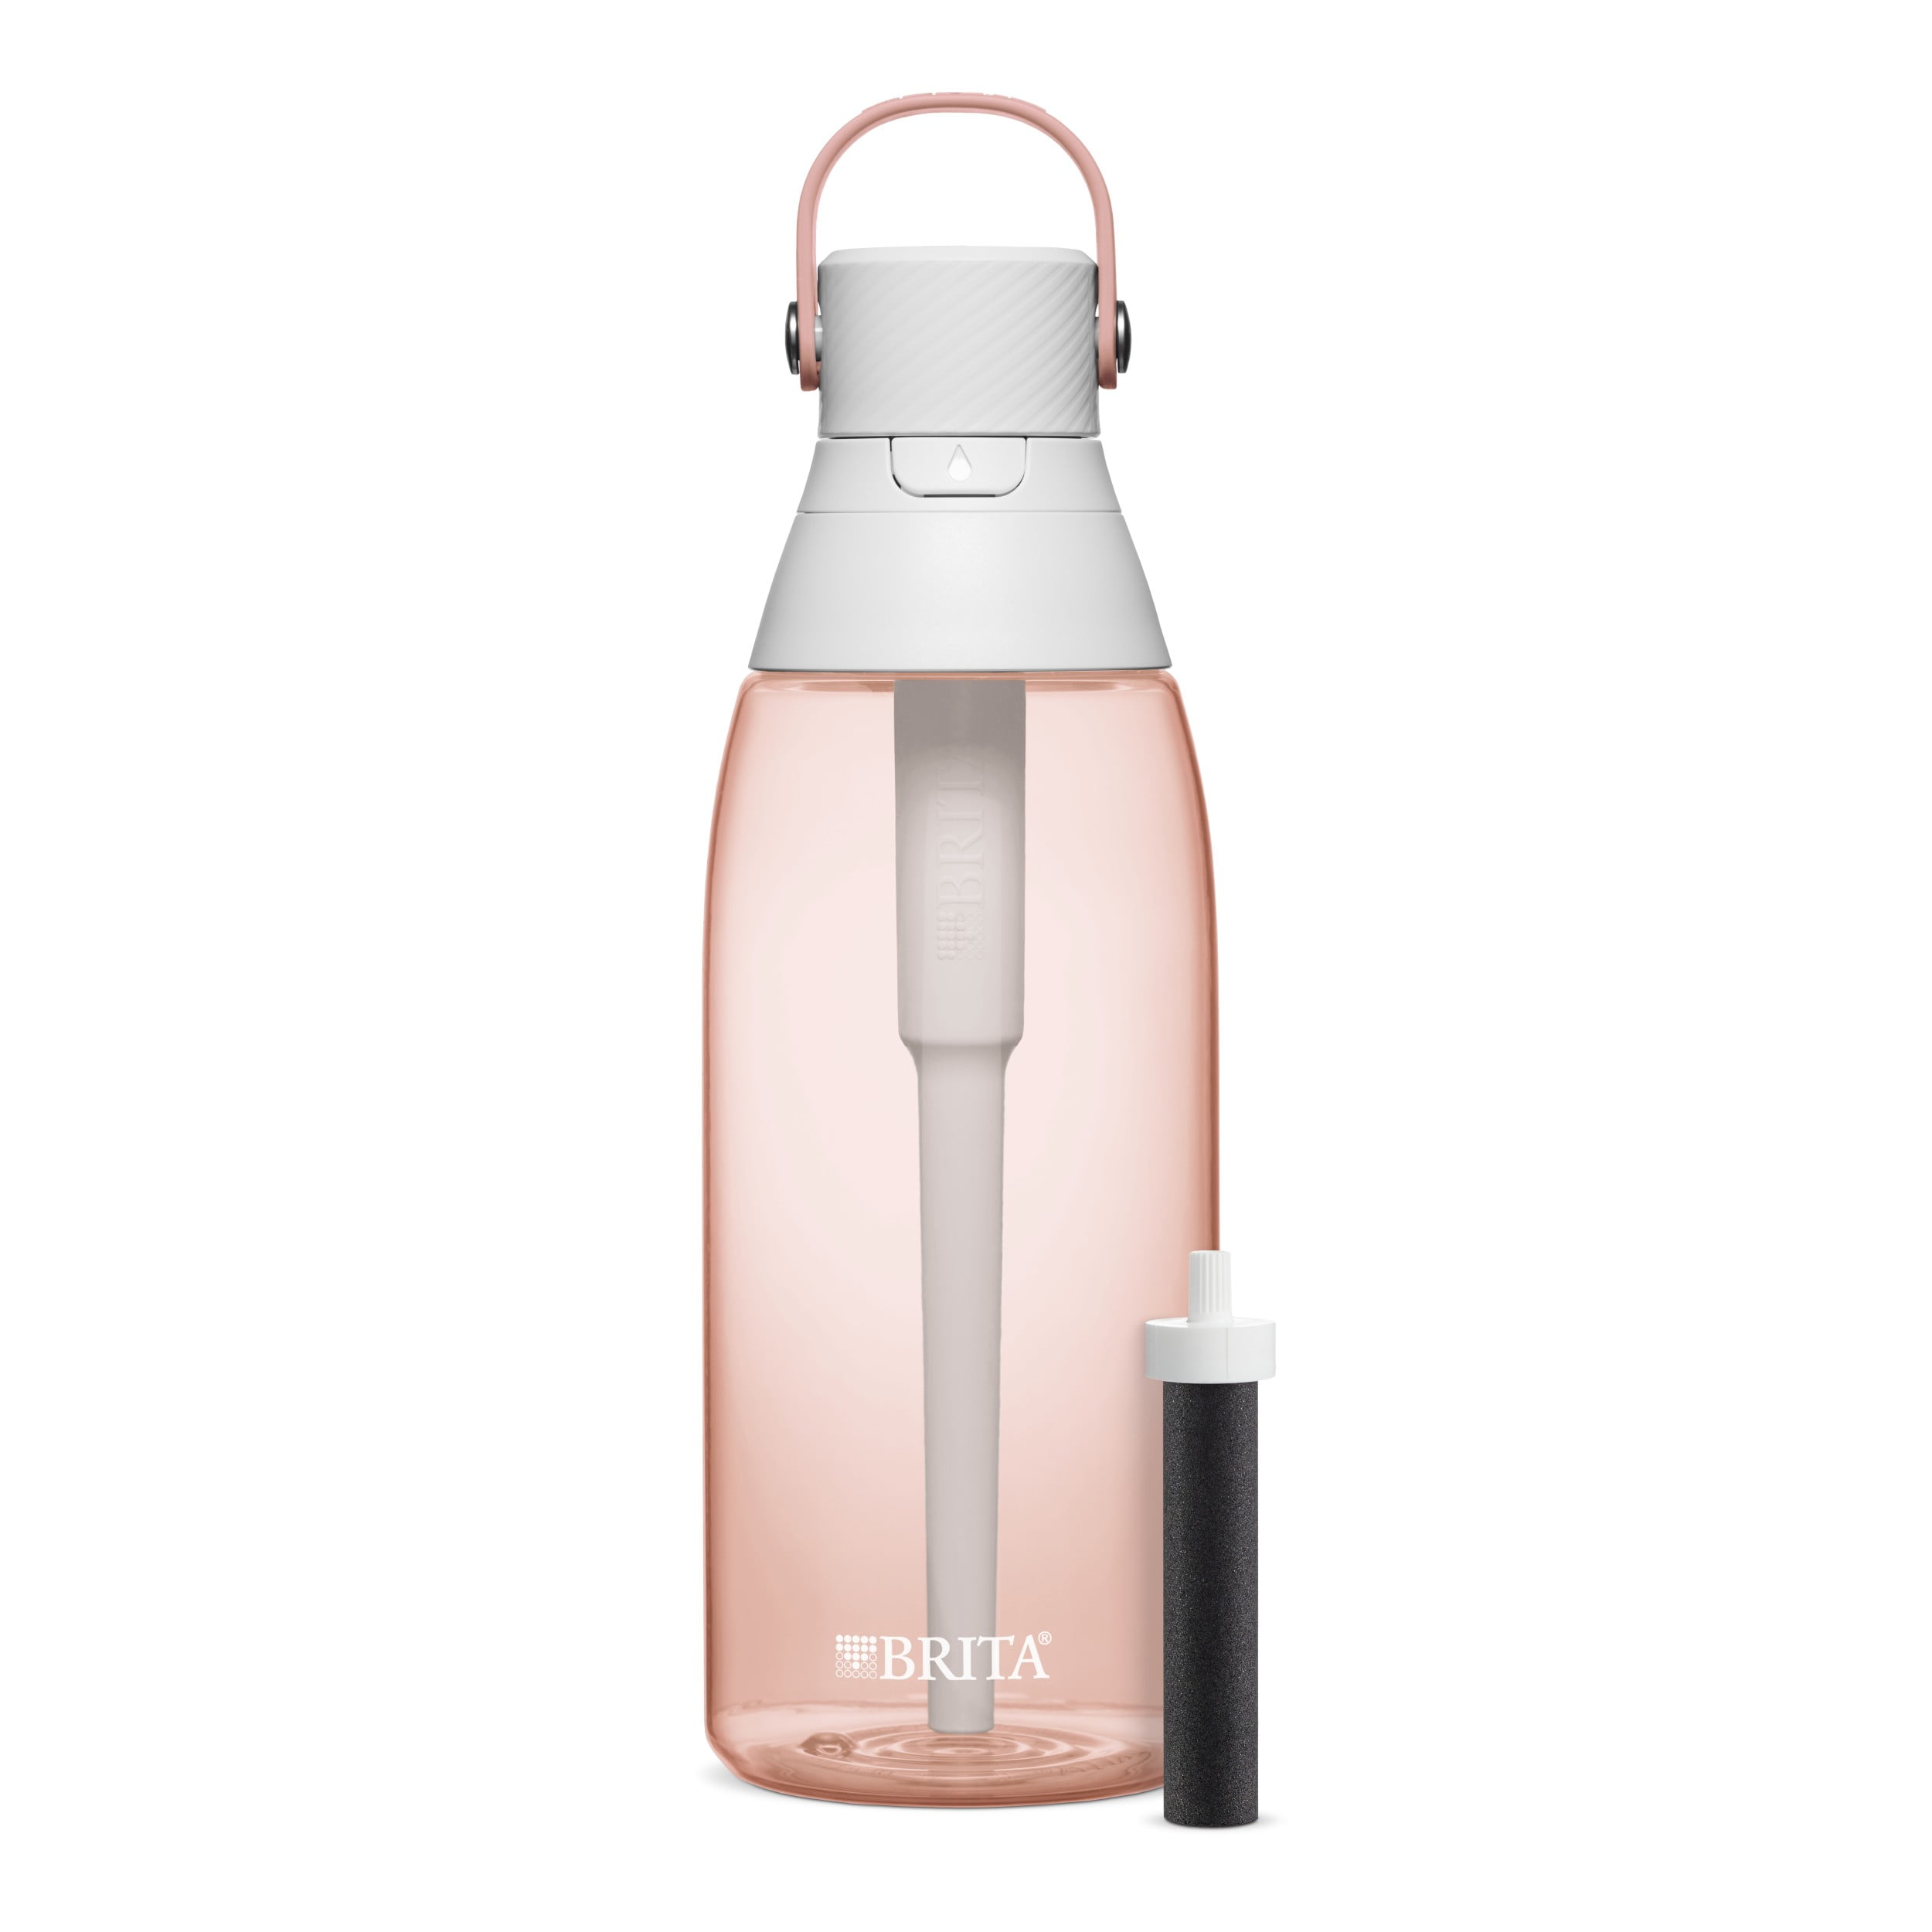 Brita Premium Leak Proof Filtered Water Bottle, Blush Pink, 36 oz